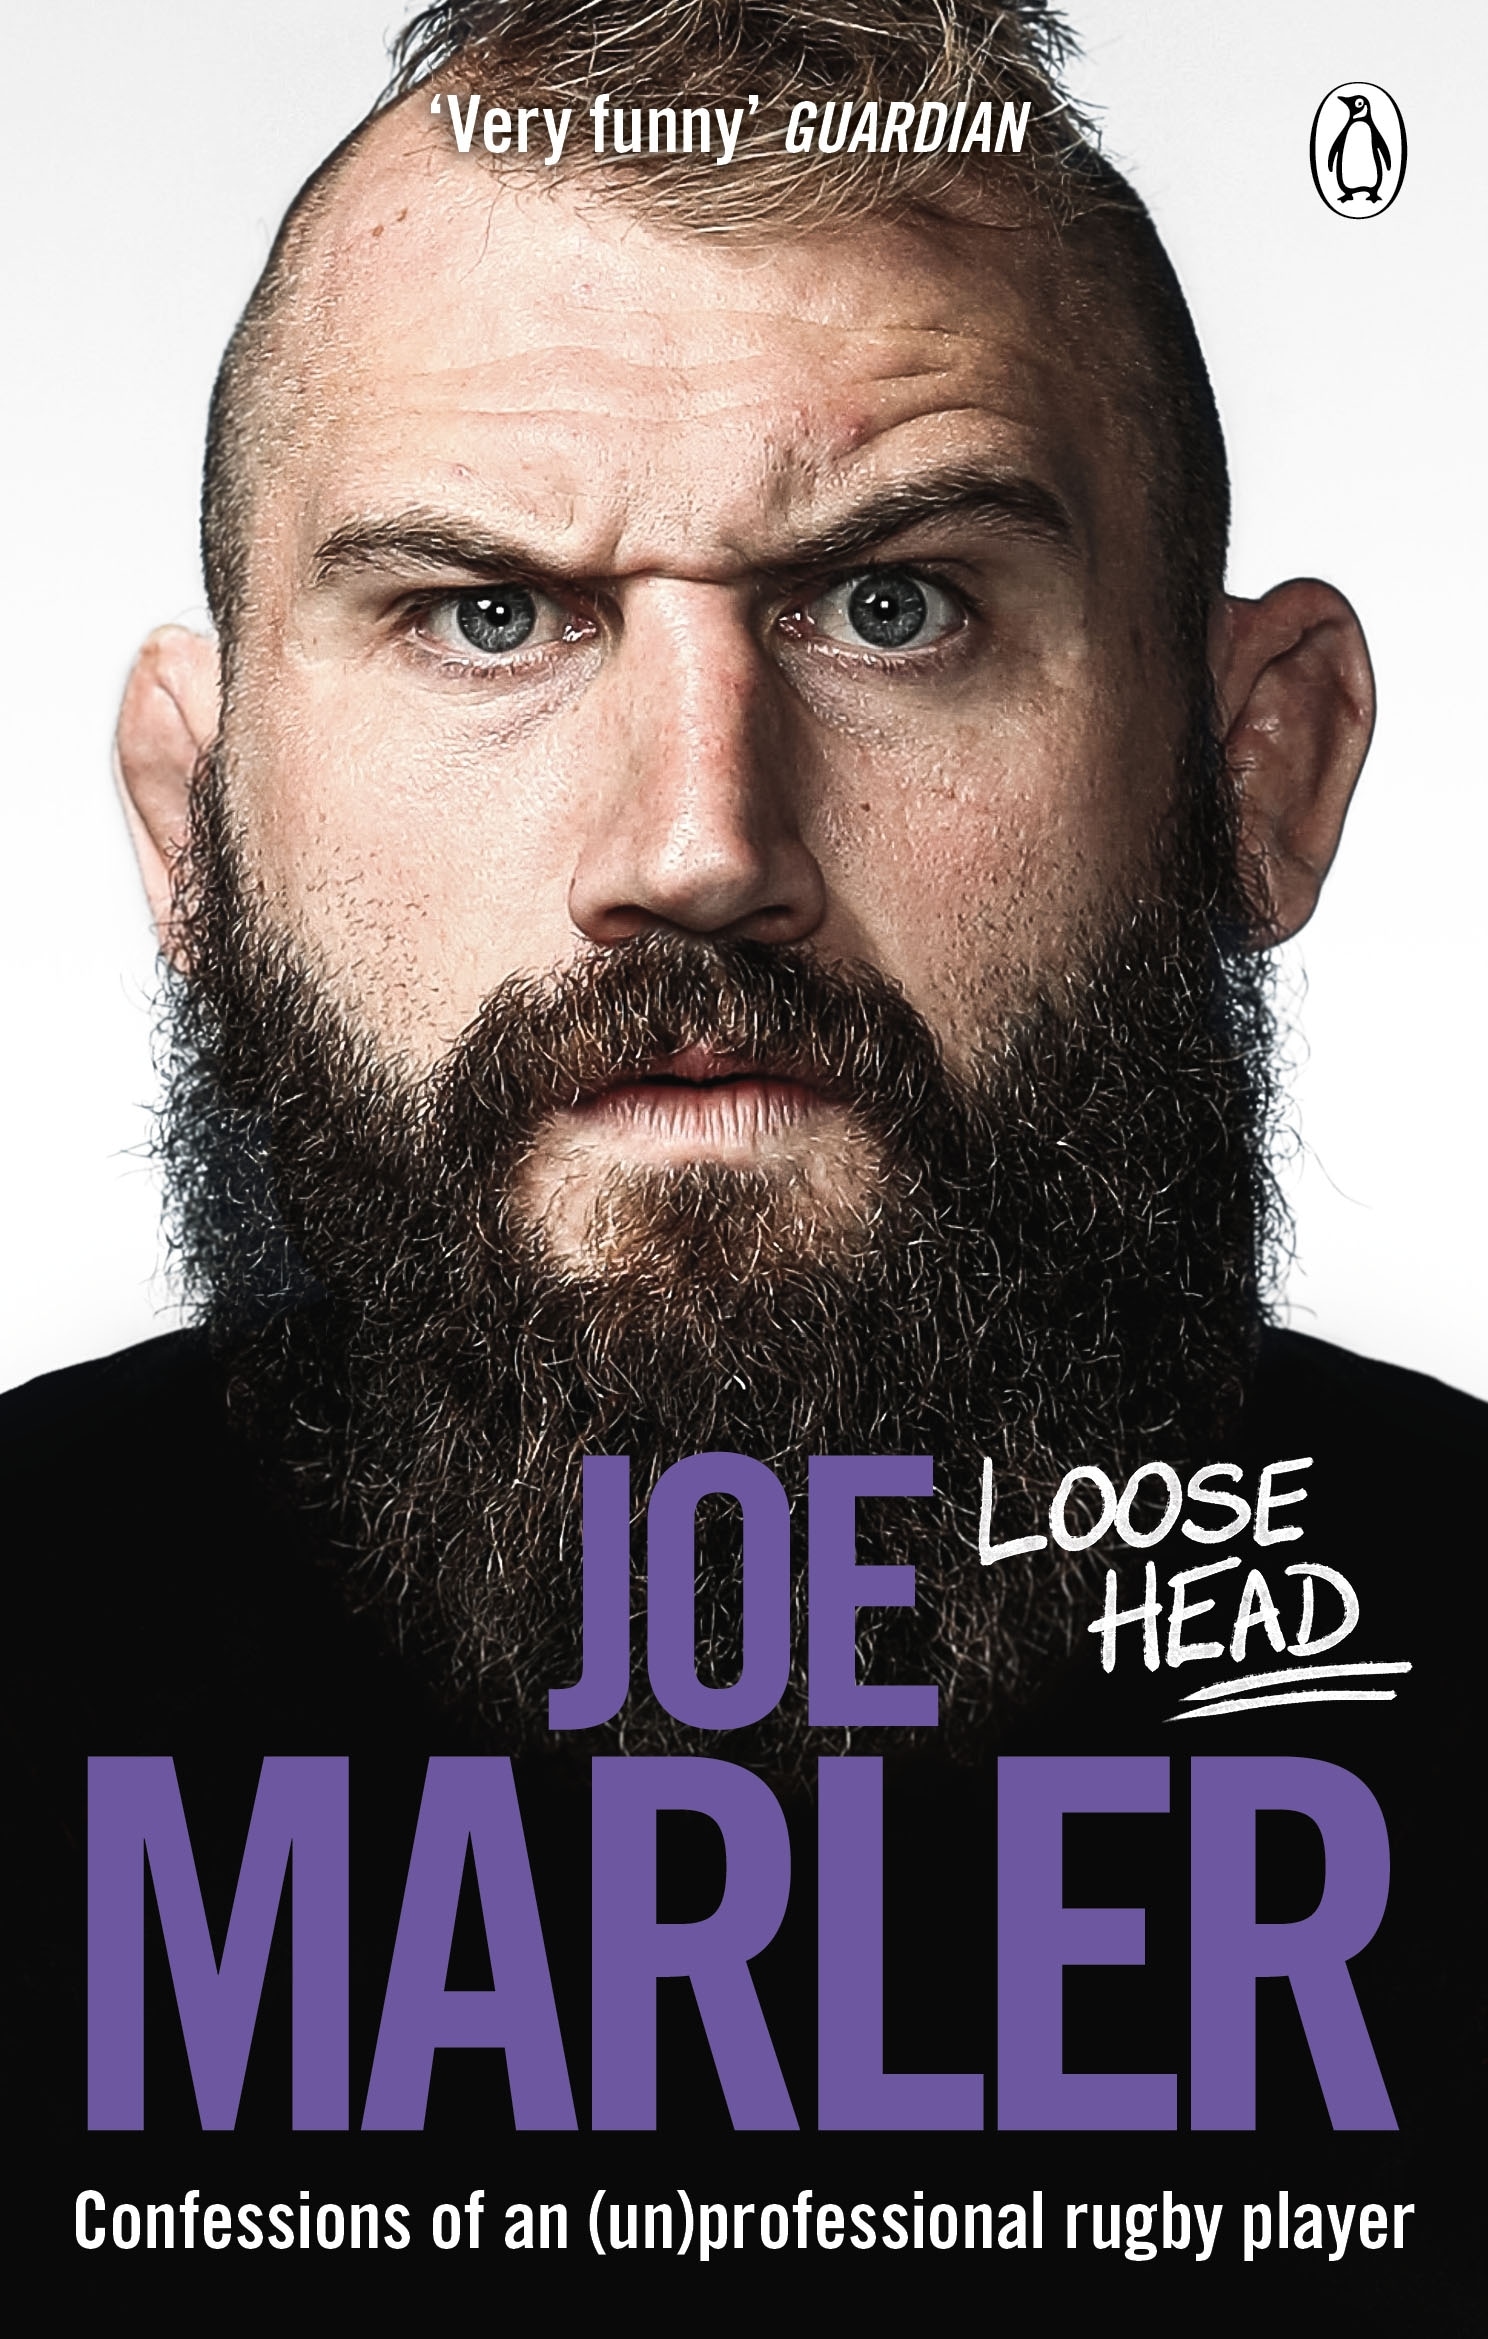 Book “Loose Head” by Joe Marler — April 29, 2021